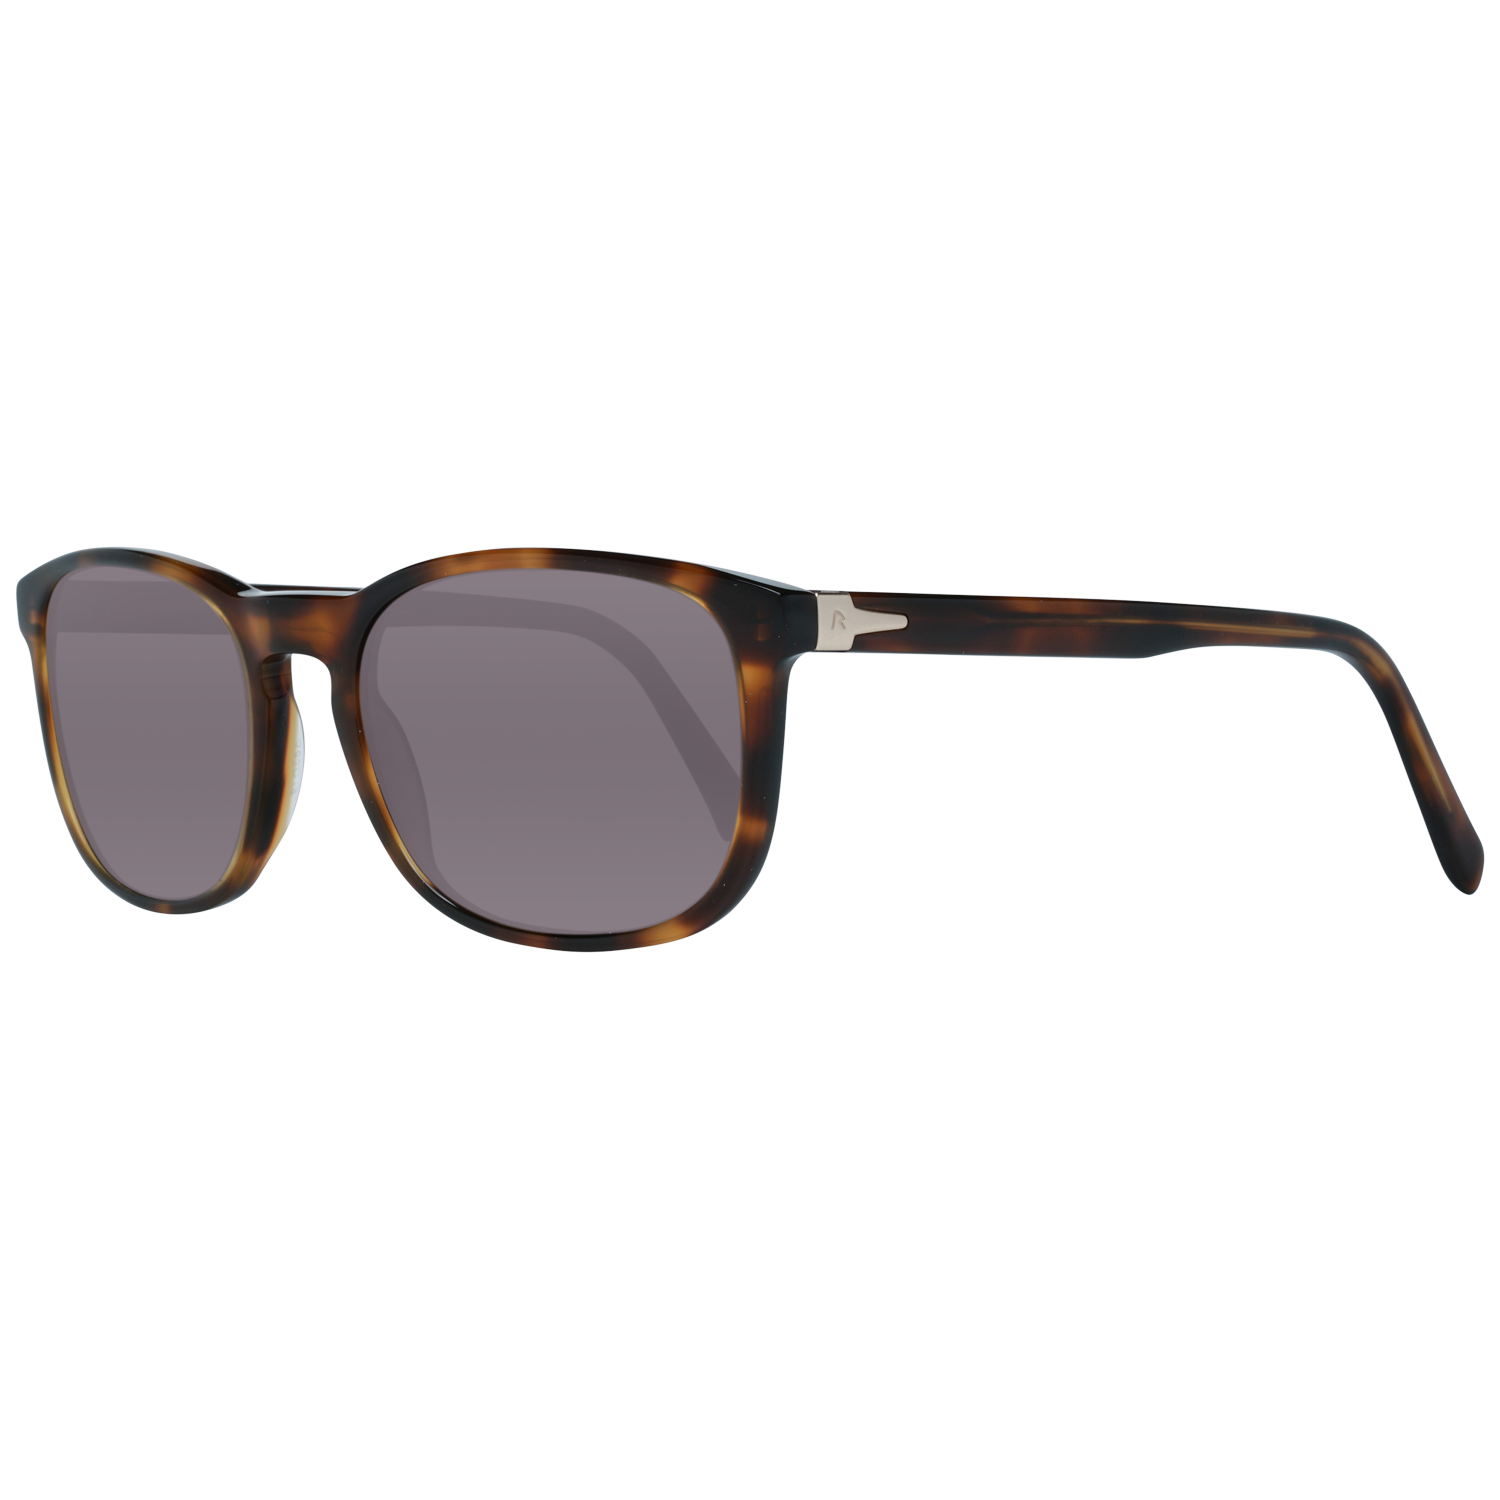 Rodenstock Sunglasses R3287 C 53 Brown